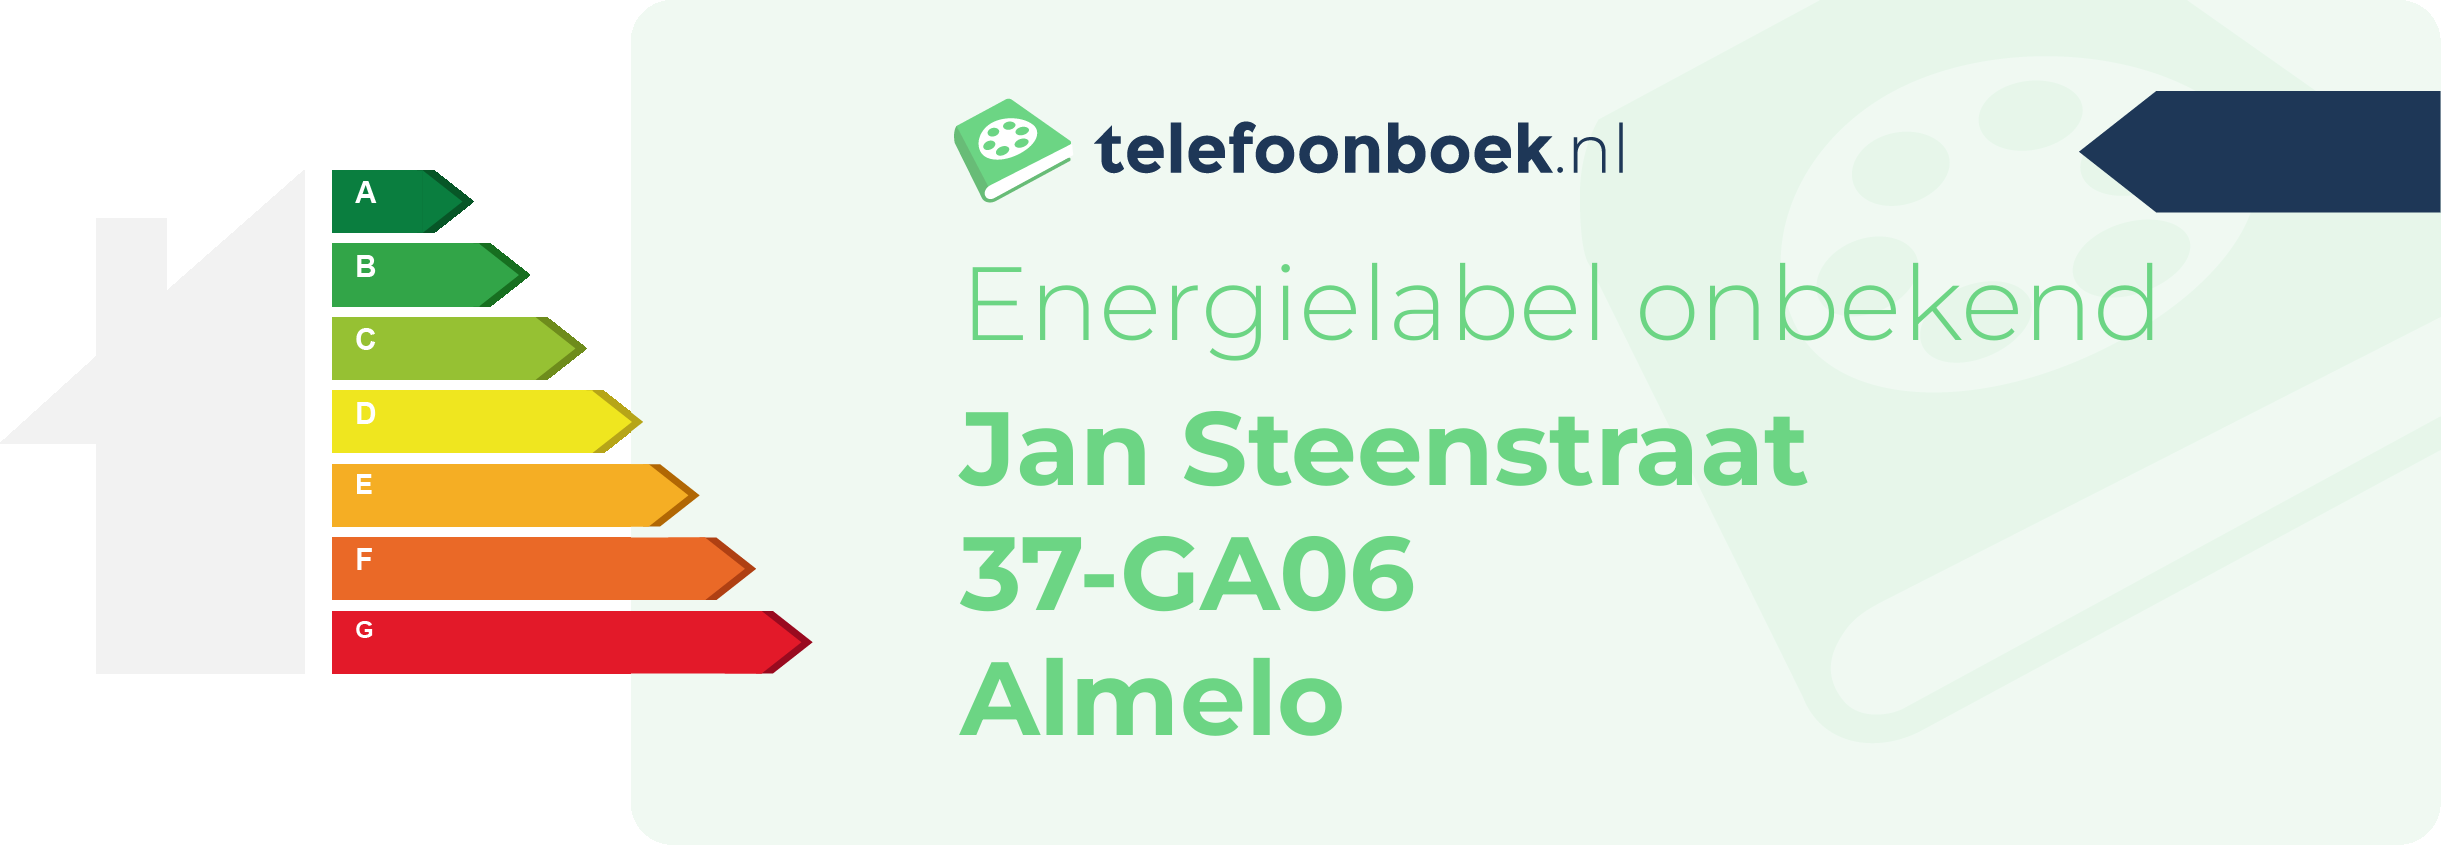 Energielabel Jan Steenstraat 37-GA06 Almelo